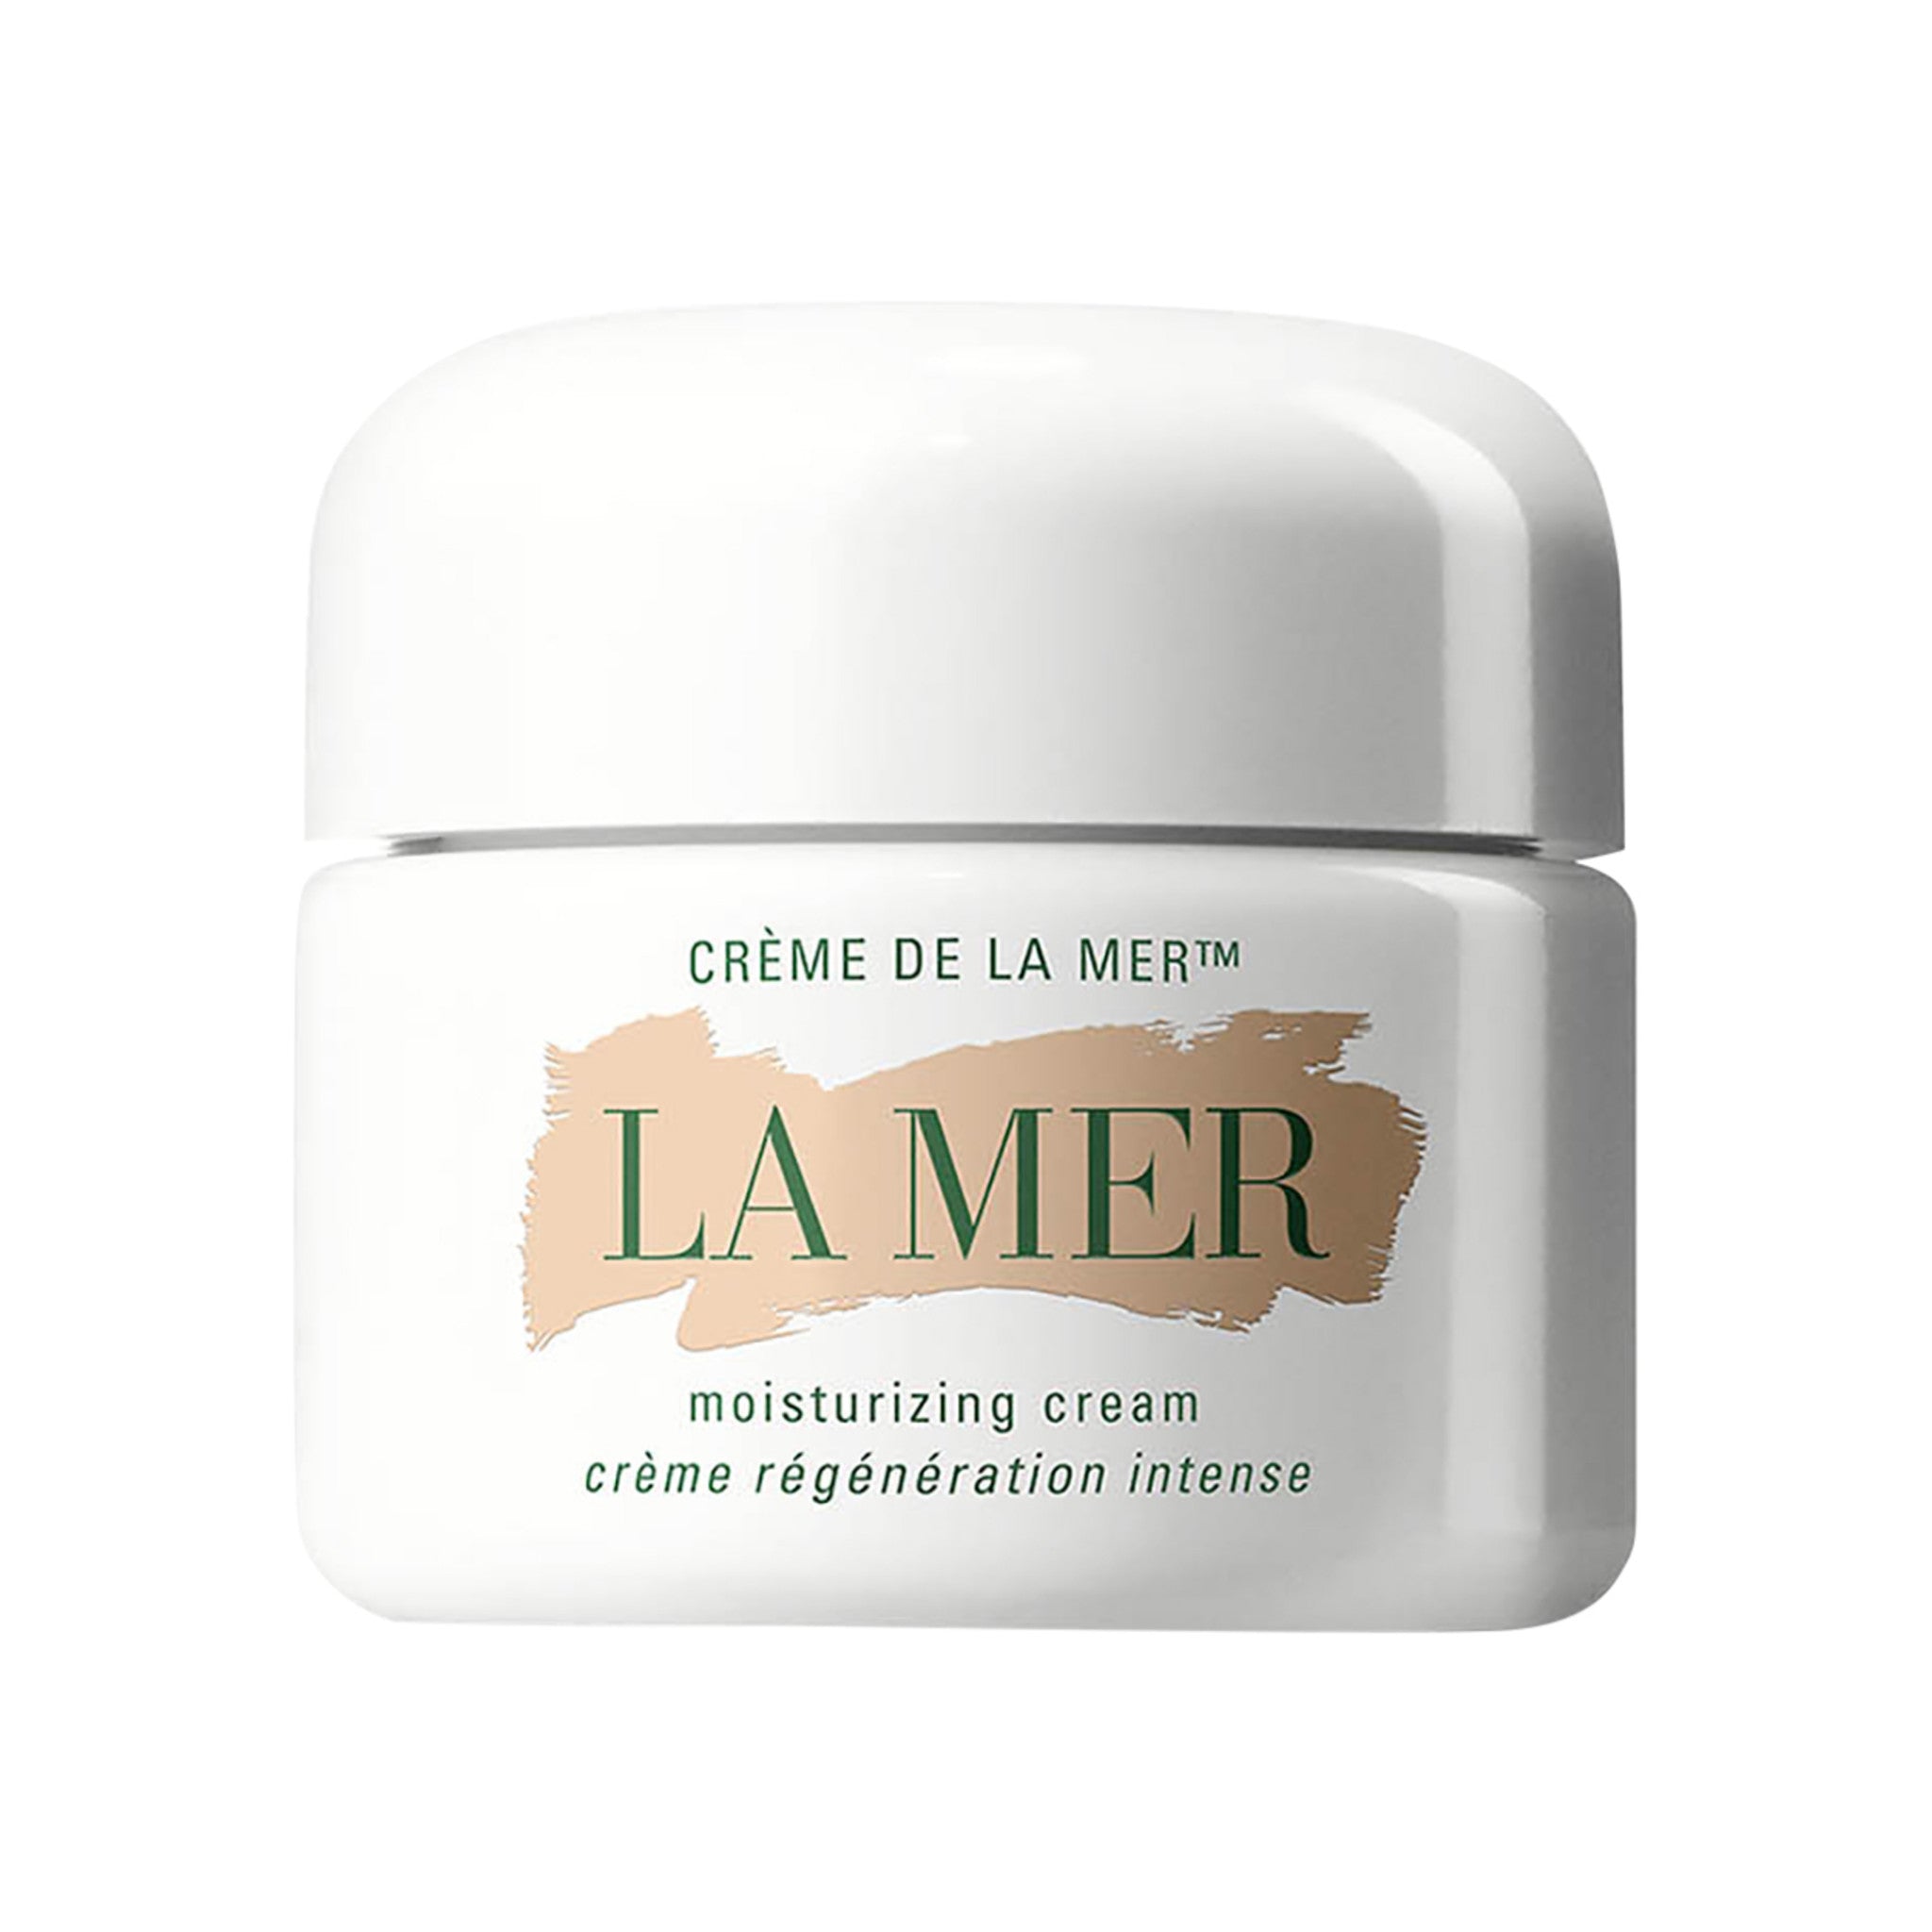 La Mer Crème de La Mer Face Cream Size variant: 1 oz. main image.